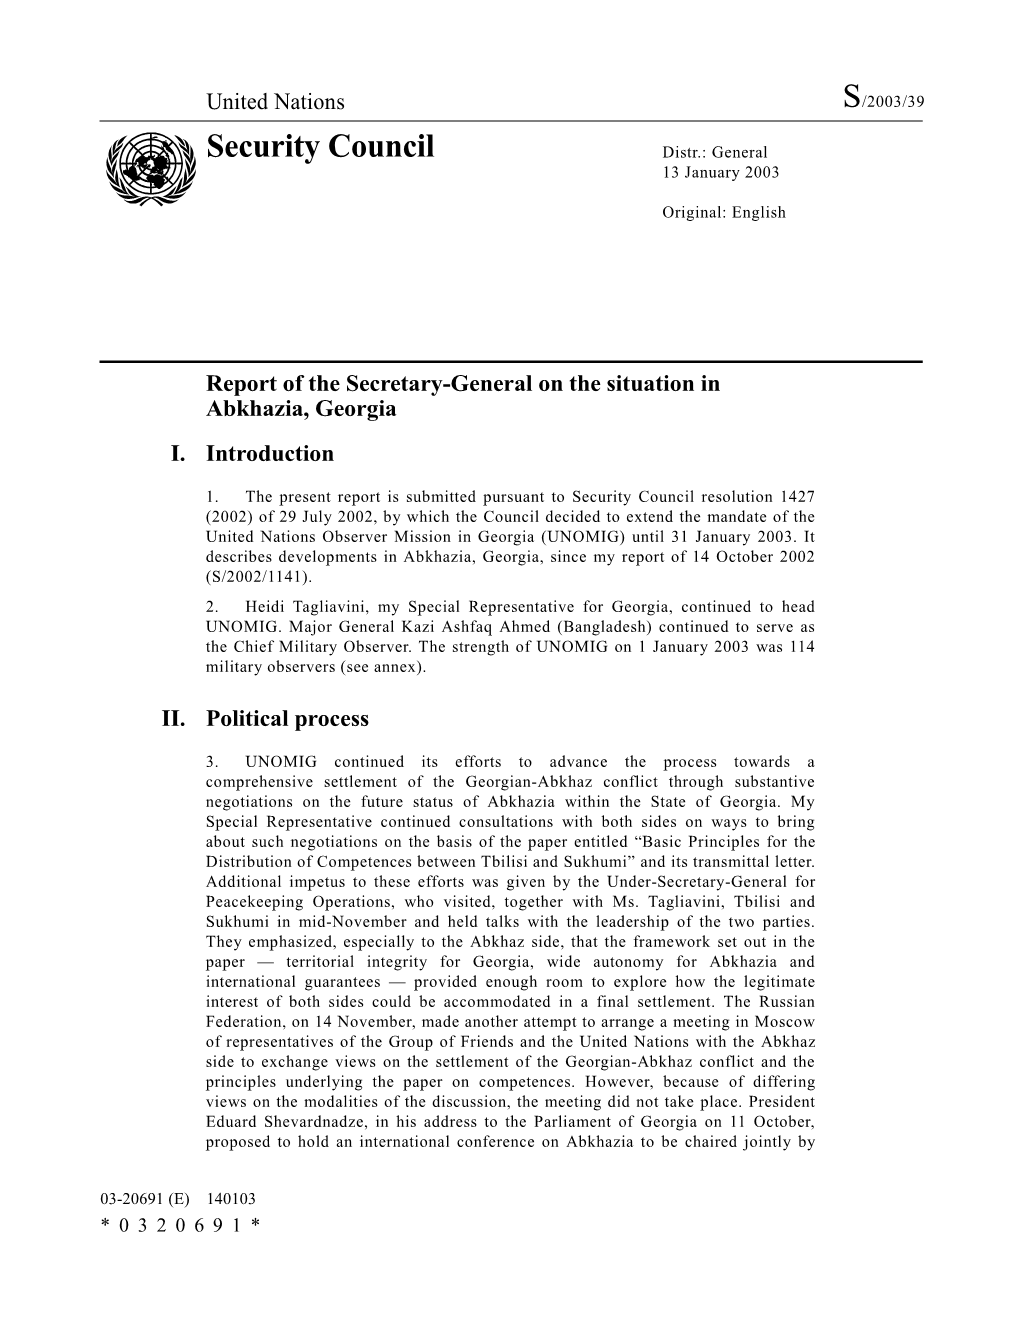 Security Council Distr.: General 13 January 2003